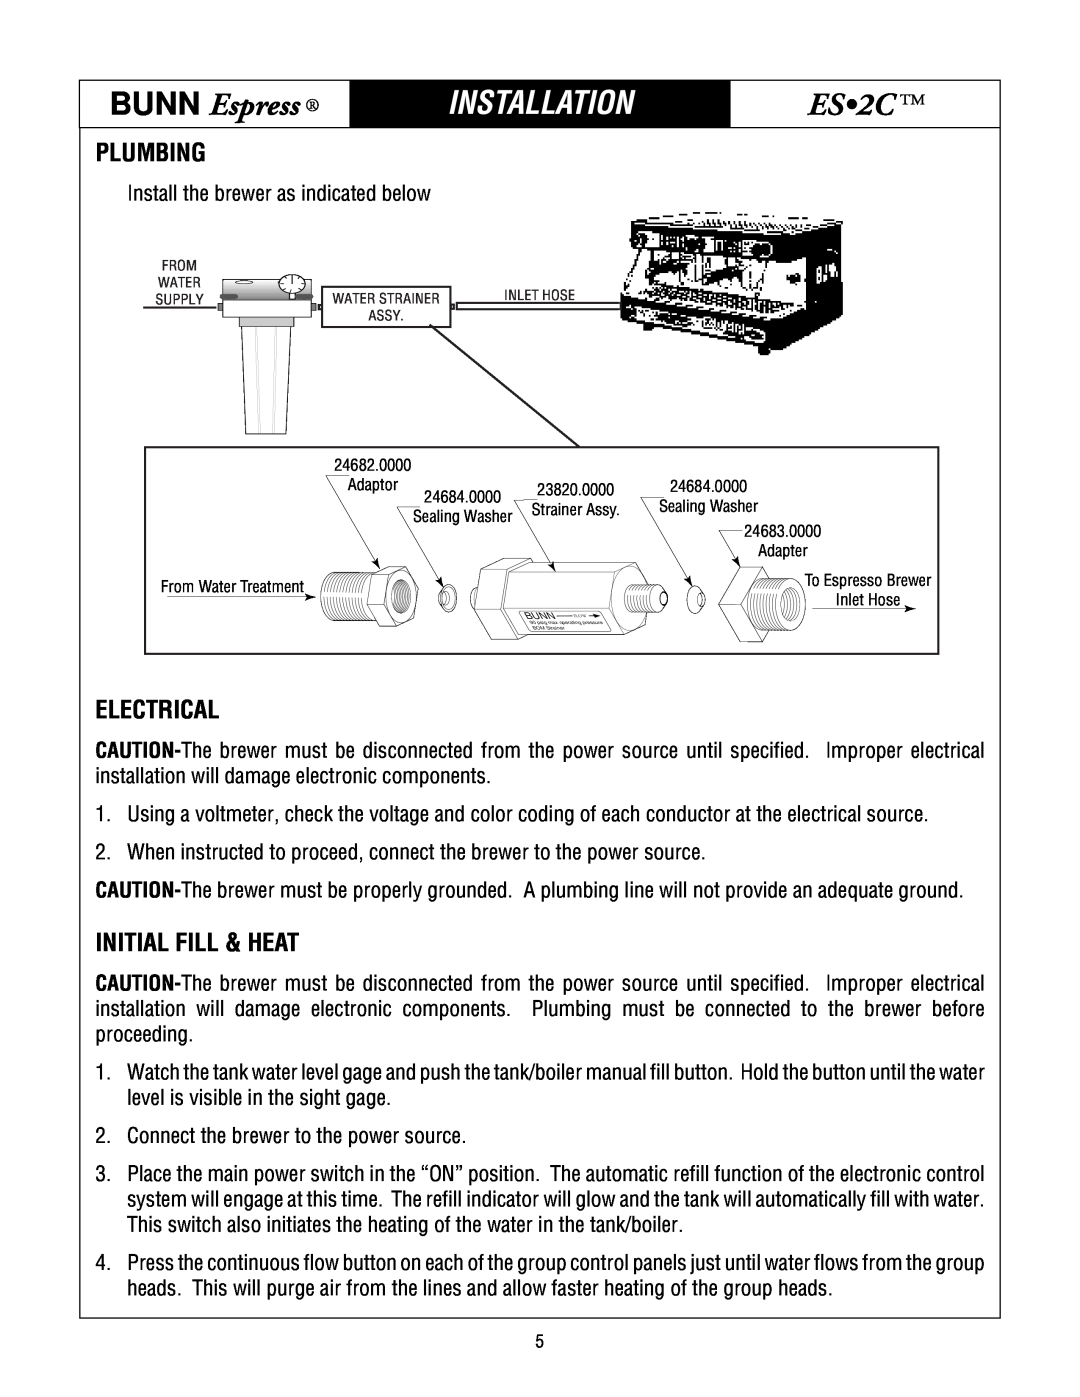 Bunn ES2C service manual Installation, Initial Fill & Heat, BUNN Espress, ES 2C, Plumbing, Electrical 